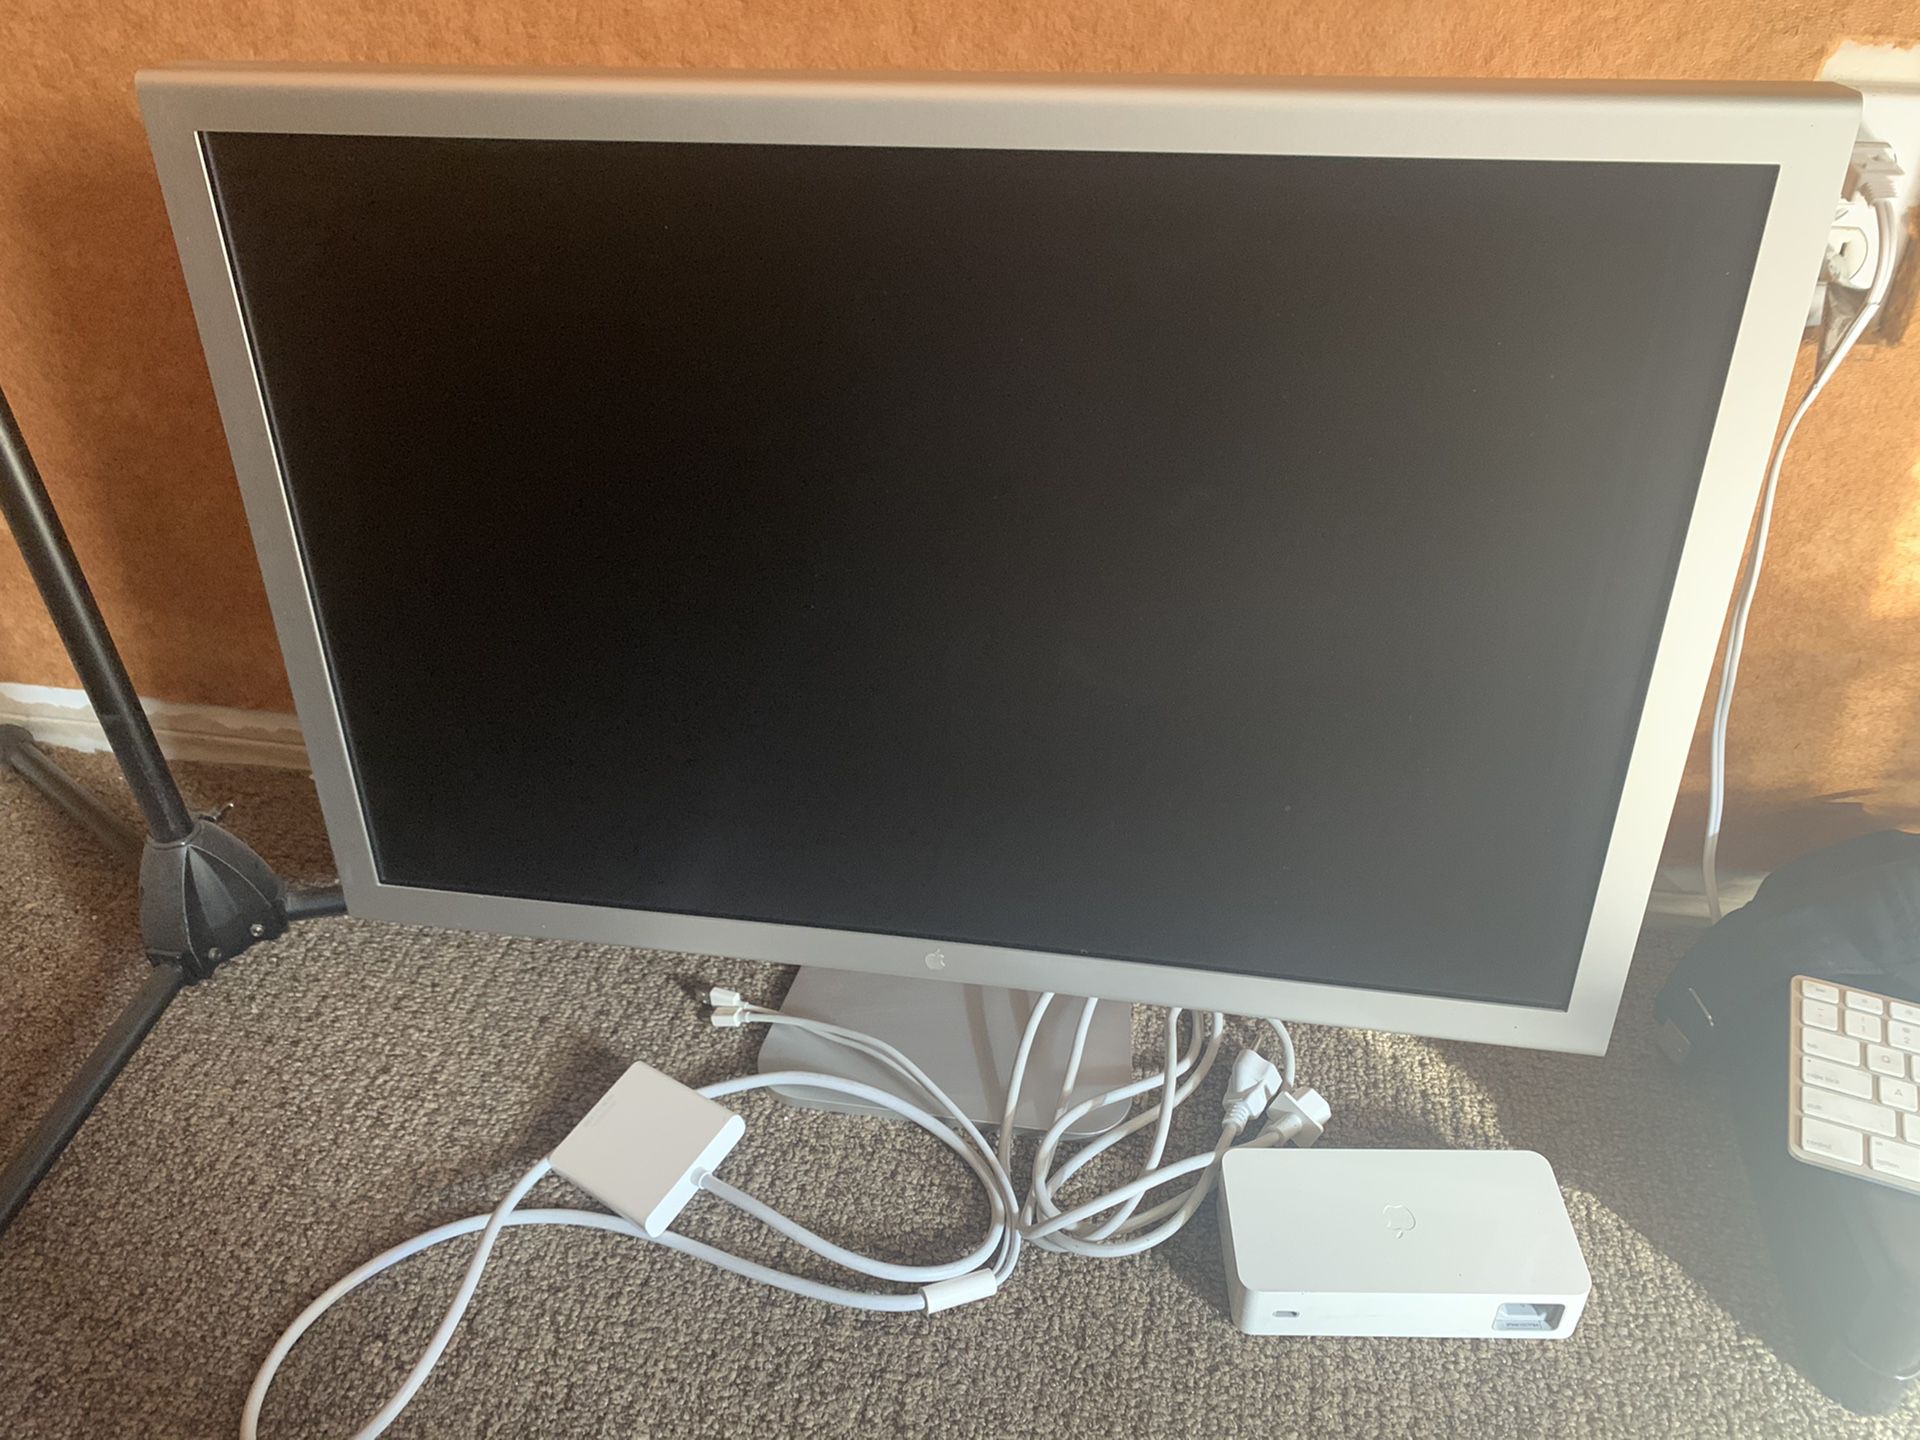 30” Apple Cinema Display with Mini Display port Adapter